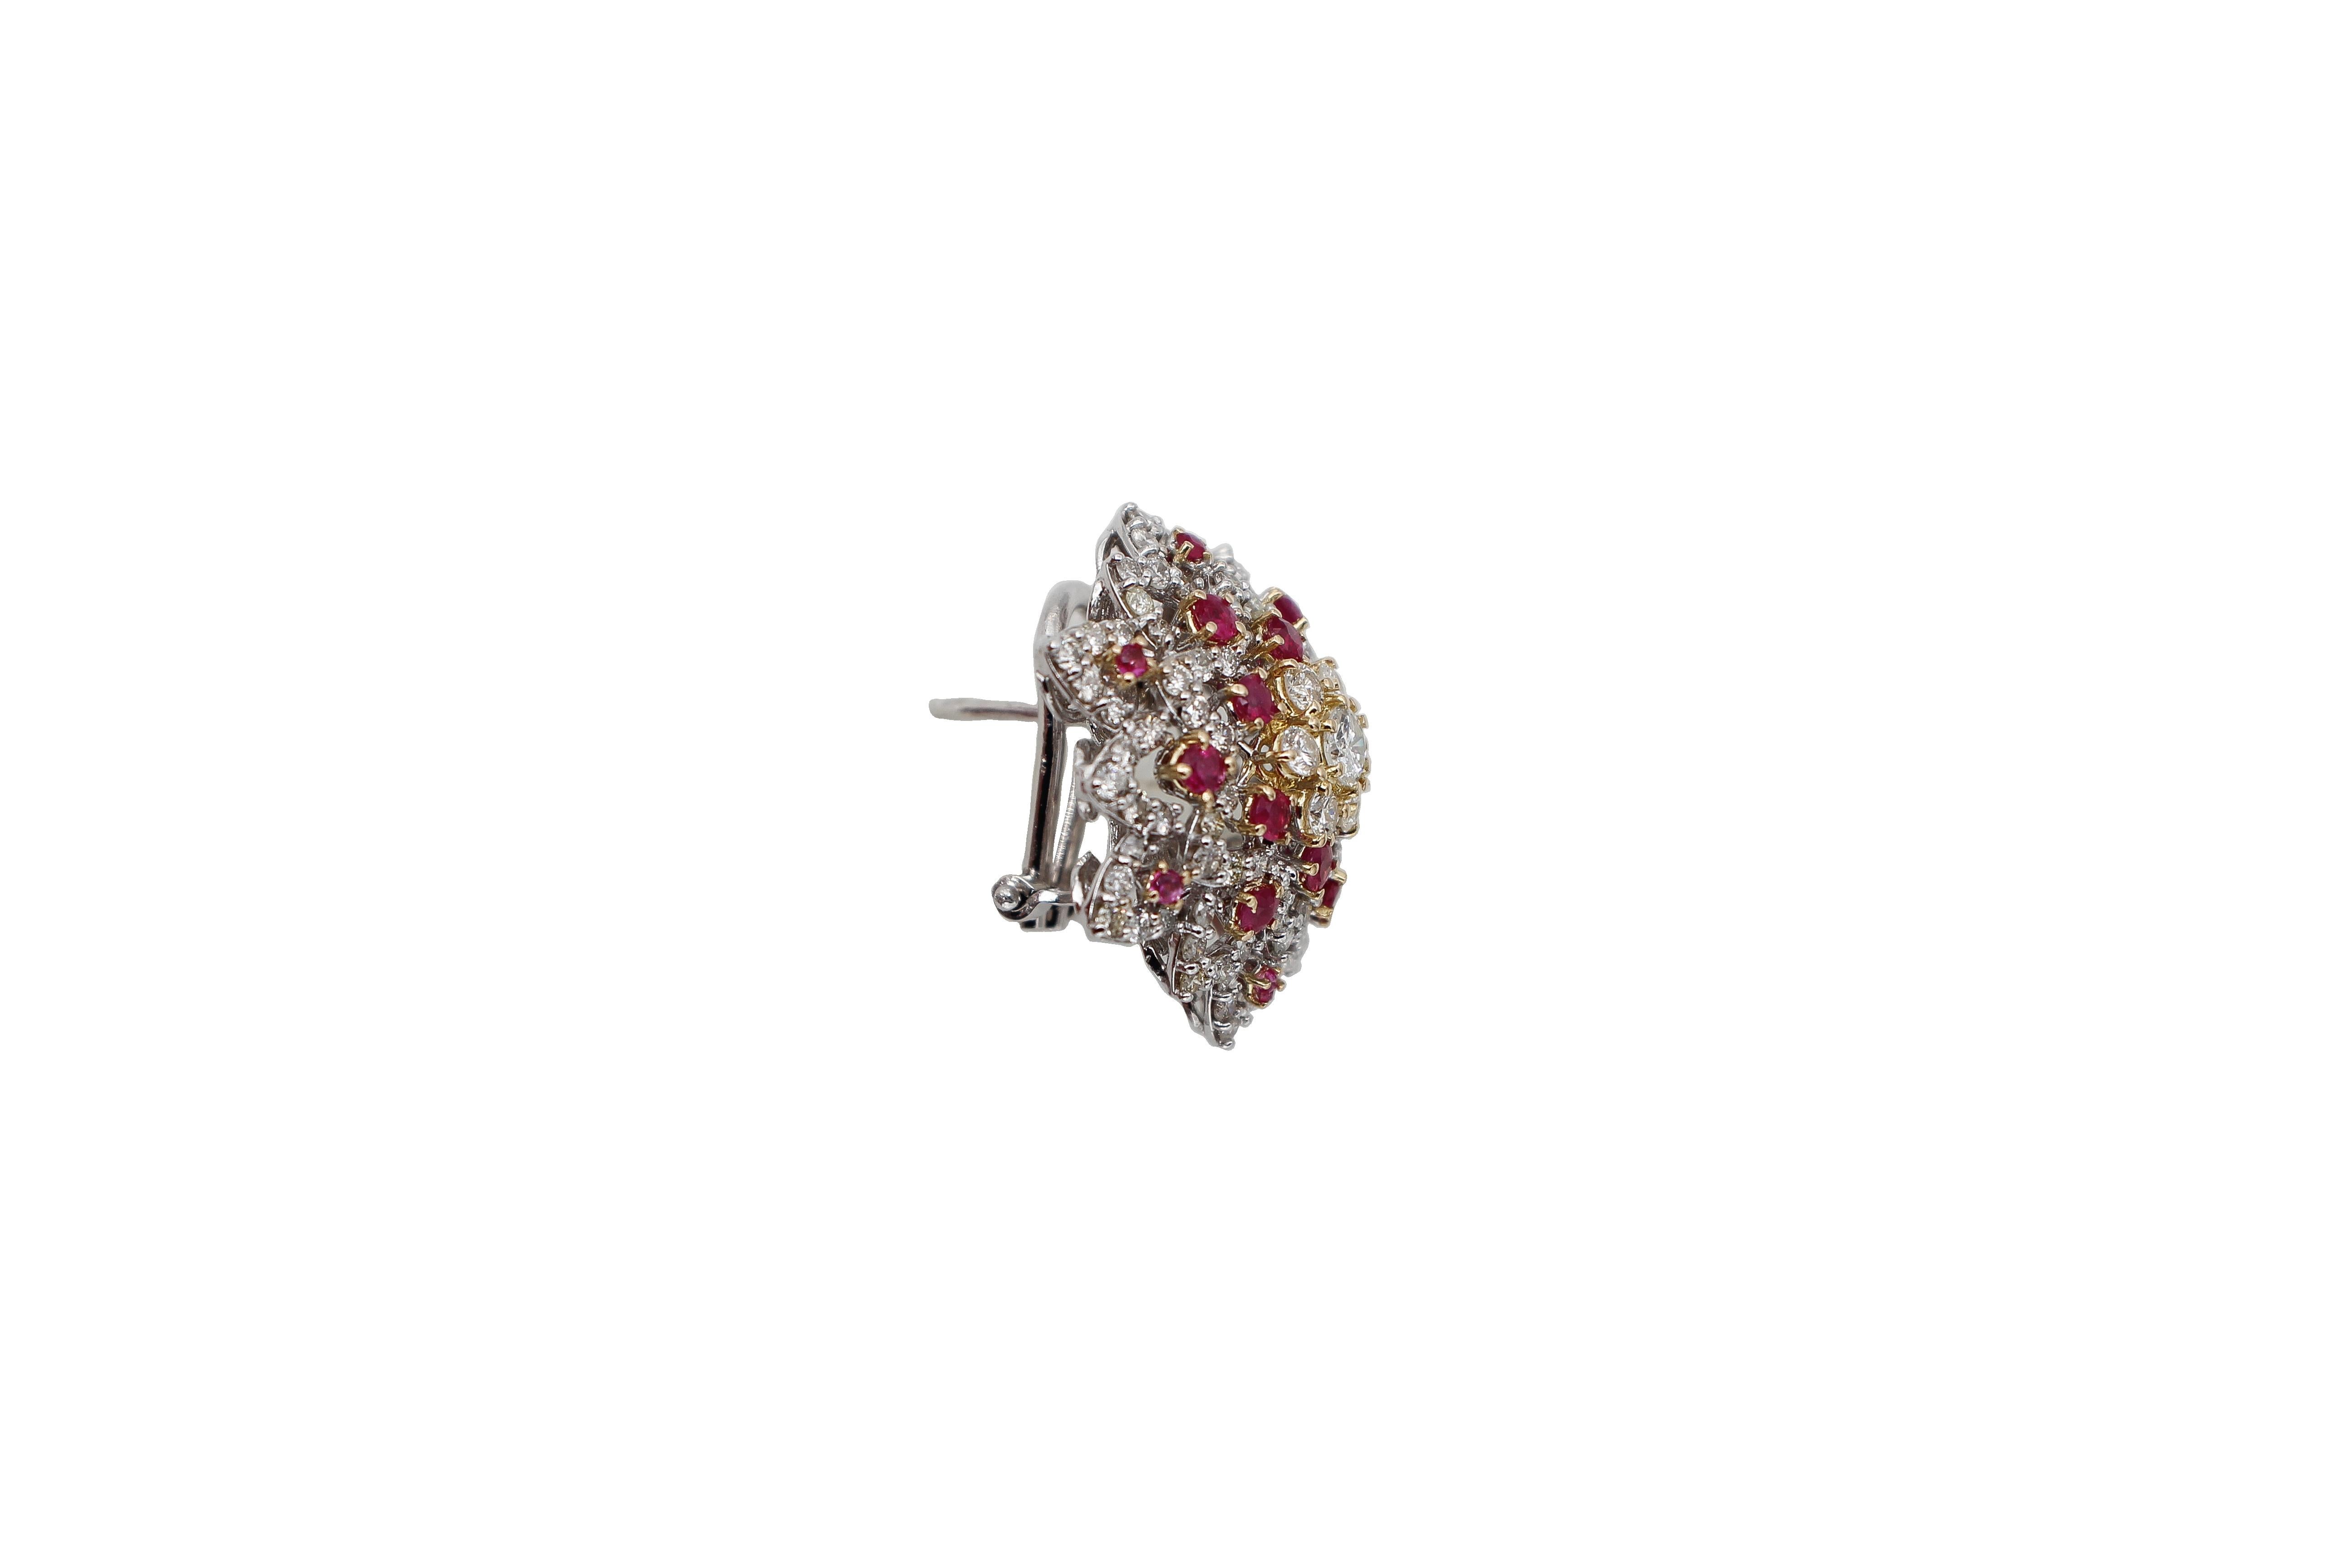 Retro Diamonds and Rubies, 18kt White/Yellow Gold Flower/Star Design Clip-On Earrings